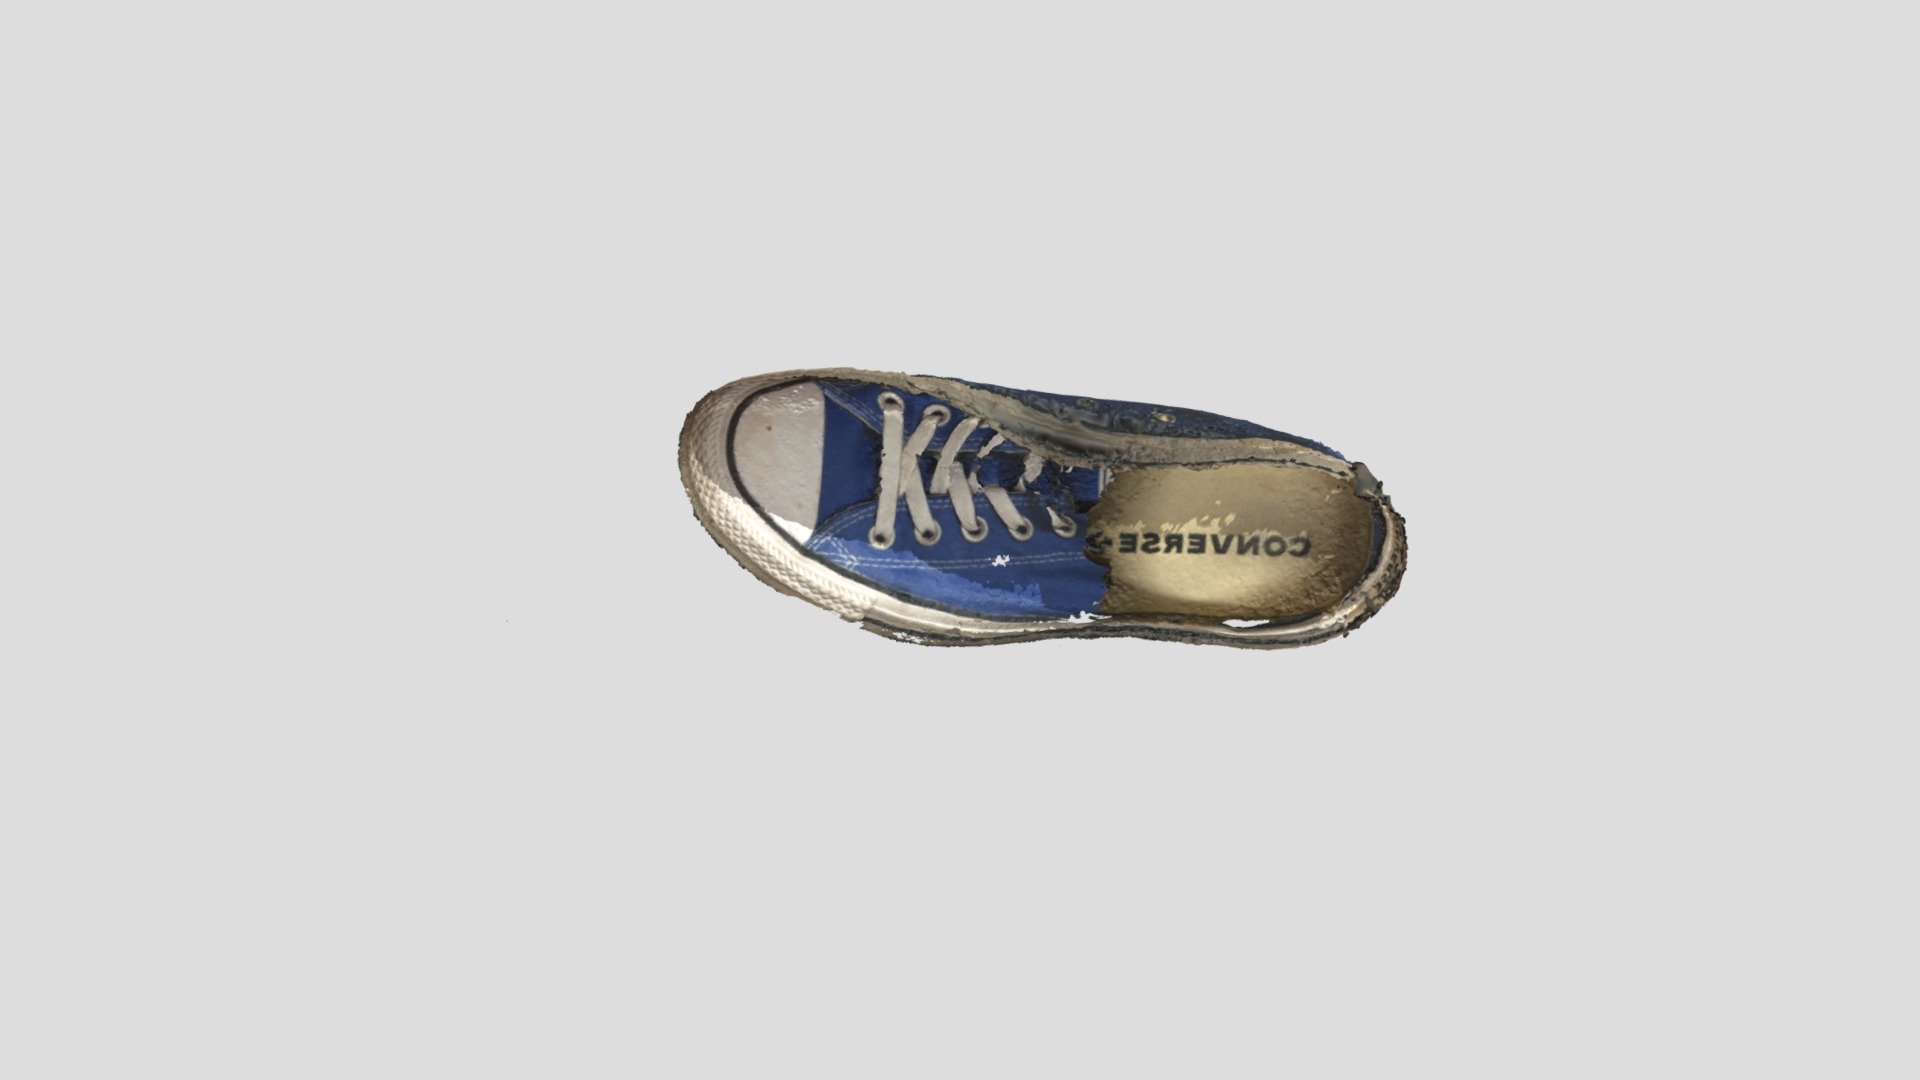 Converse Shoe